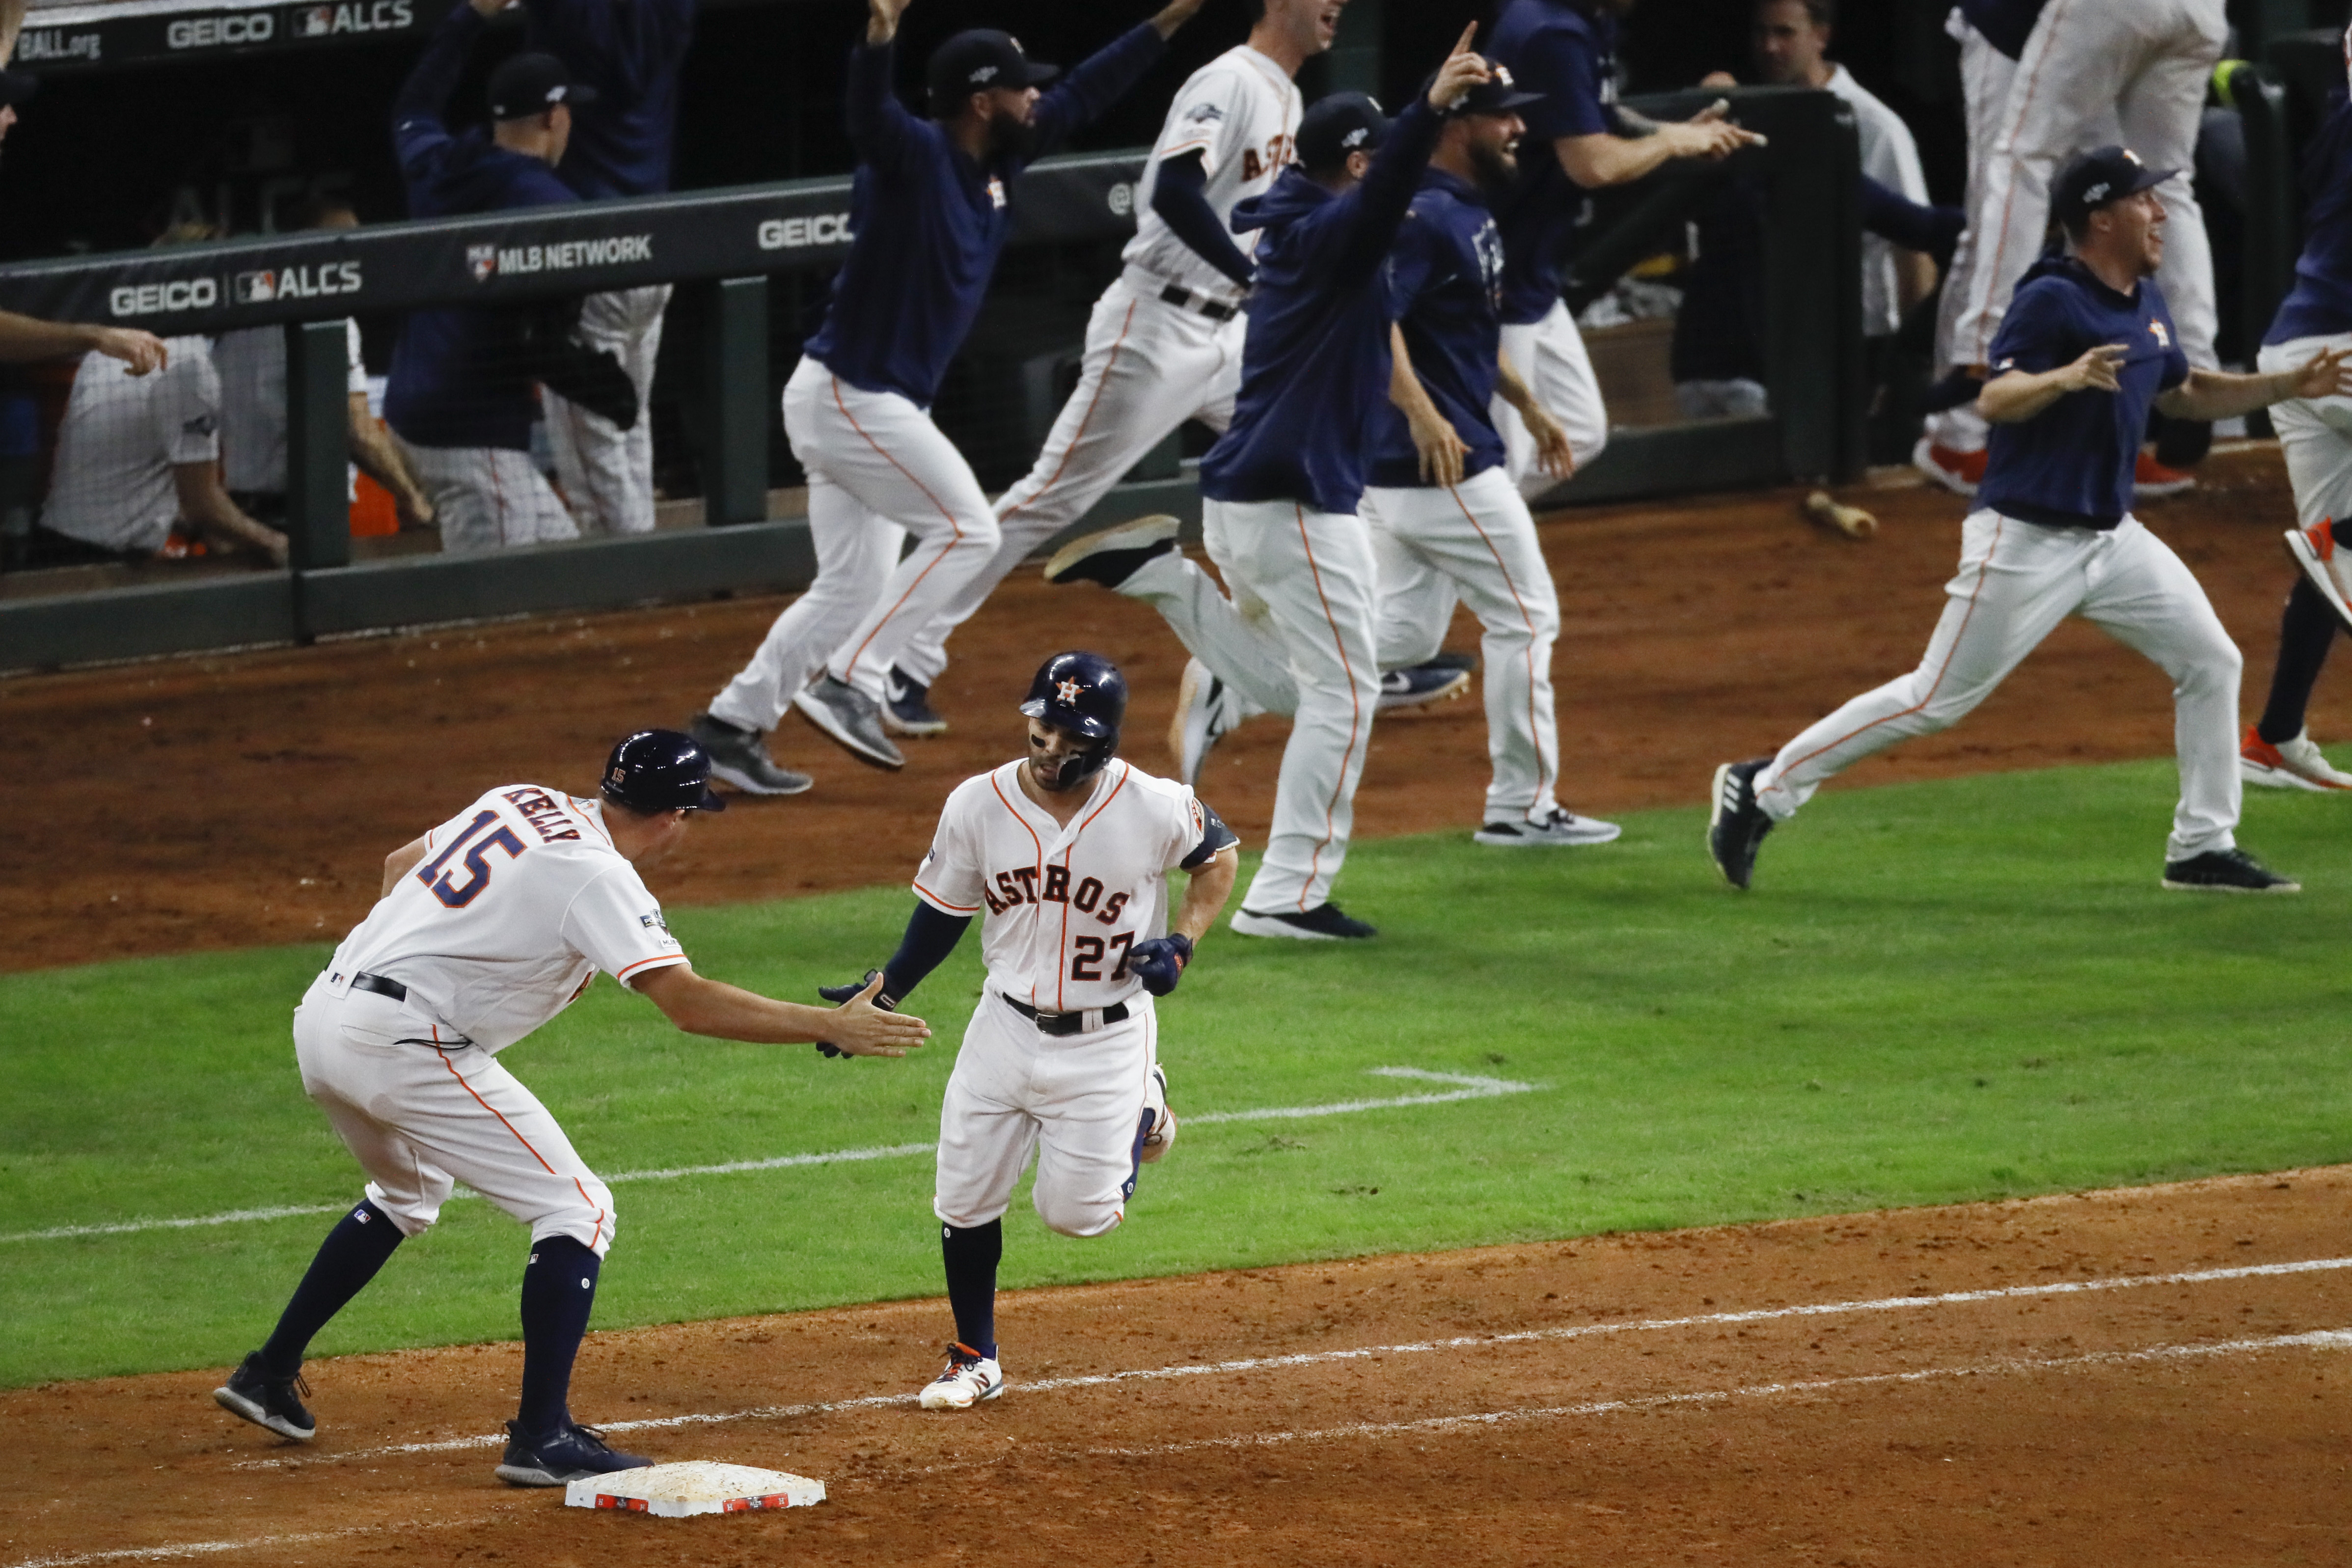 Altuve blasts Astros into World Series with walk-off homer on Chapman